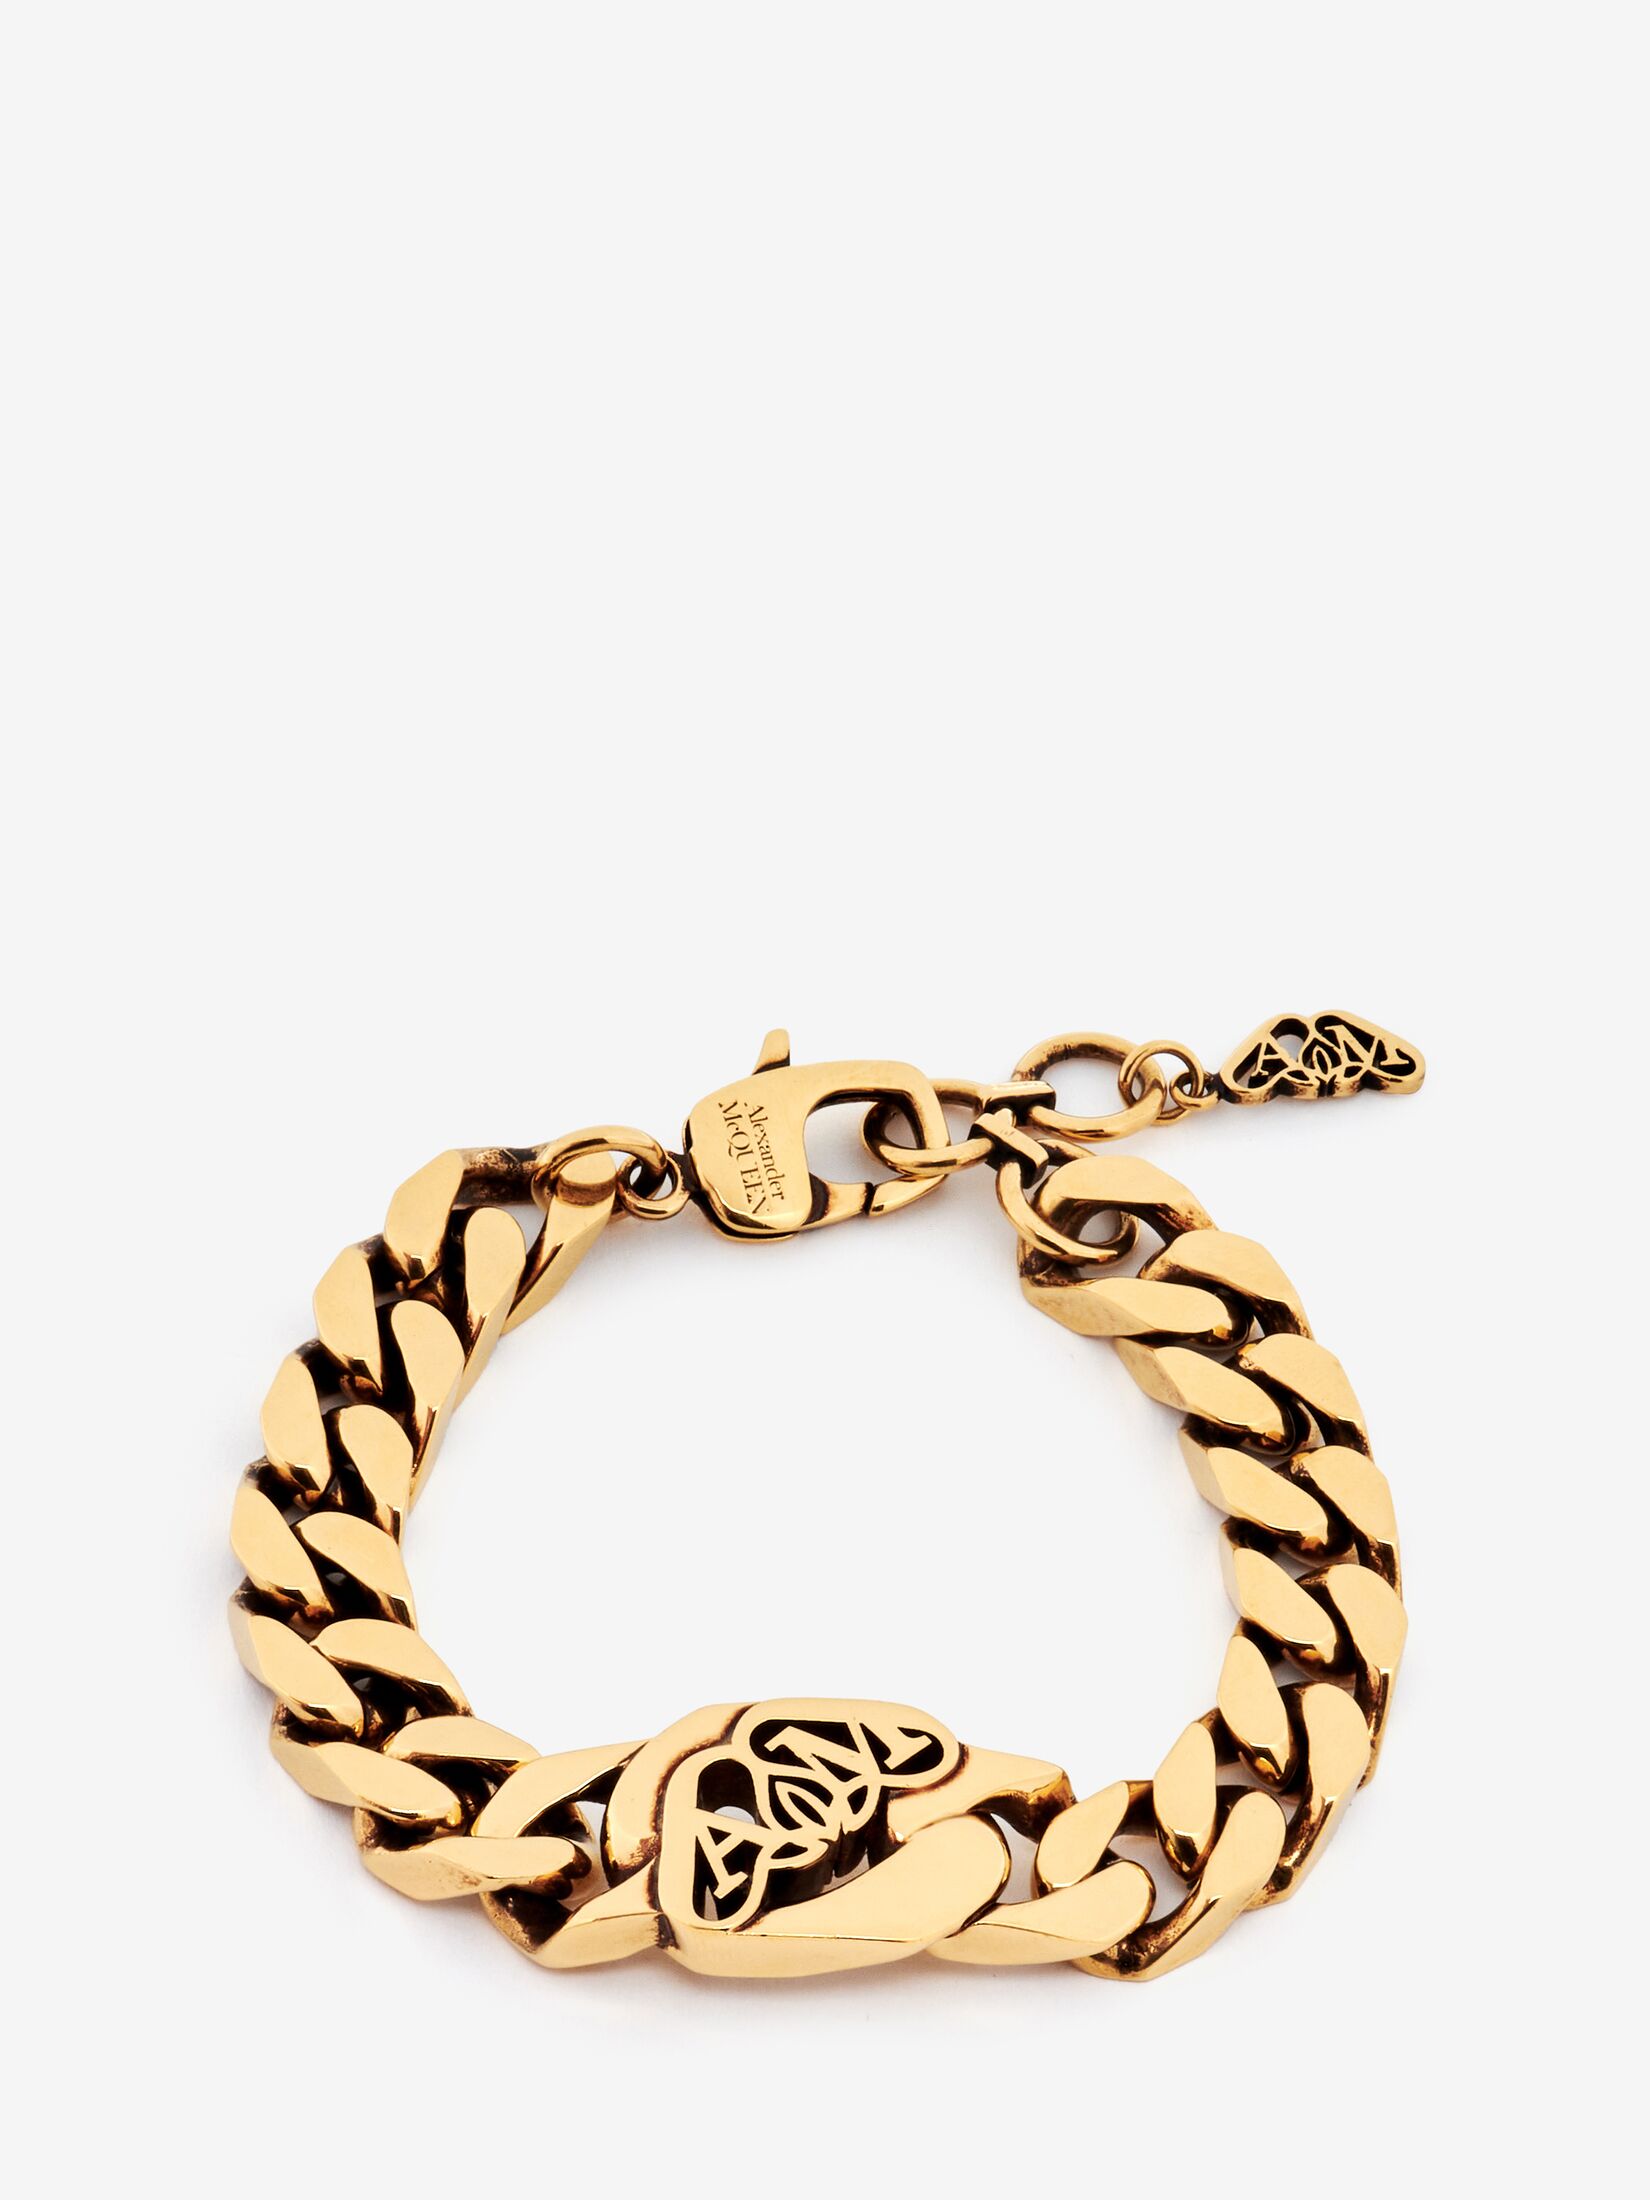 316l Stainless Steel Fashion Link Chain Bangle Bracelet Women Gold Color -  Bracelets - Aliexpress